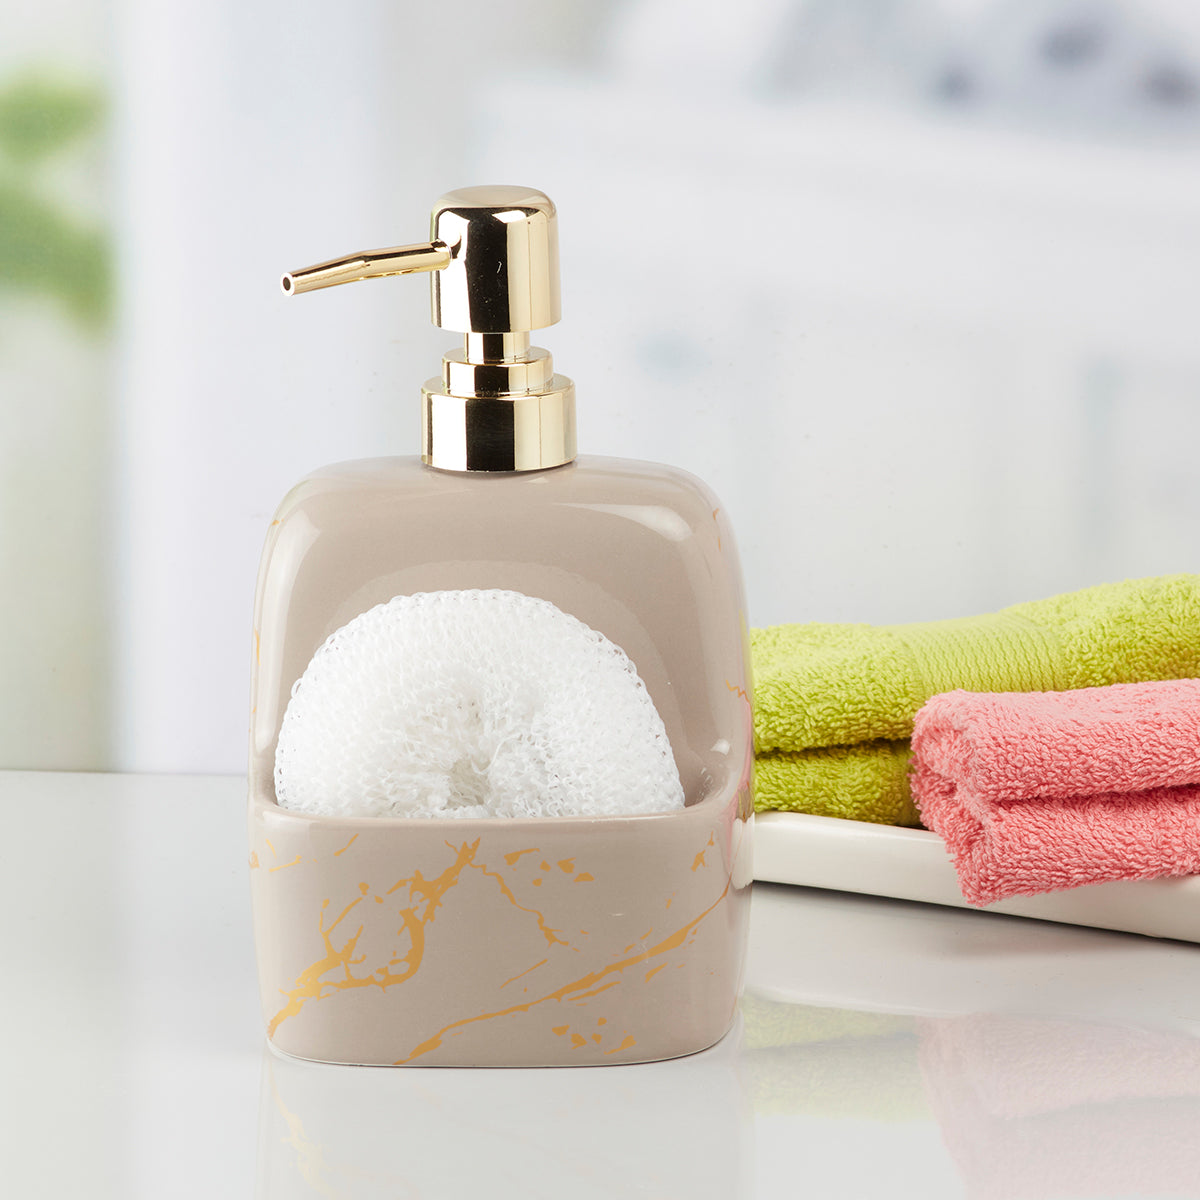 Ceramic Soap Dispenser handwash Pump for Bathroom, Set of 1, Grey/Gold (10205)